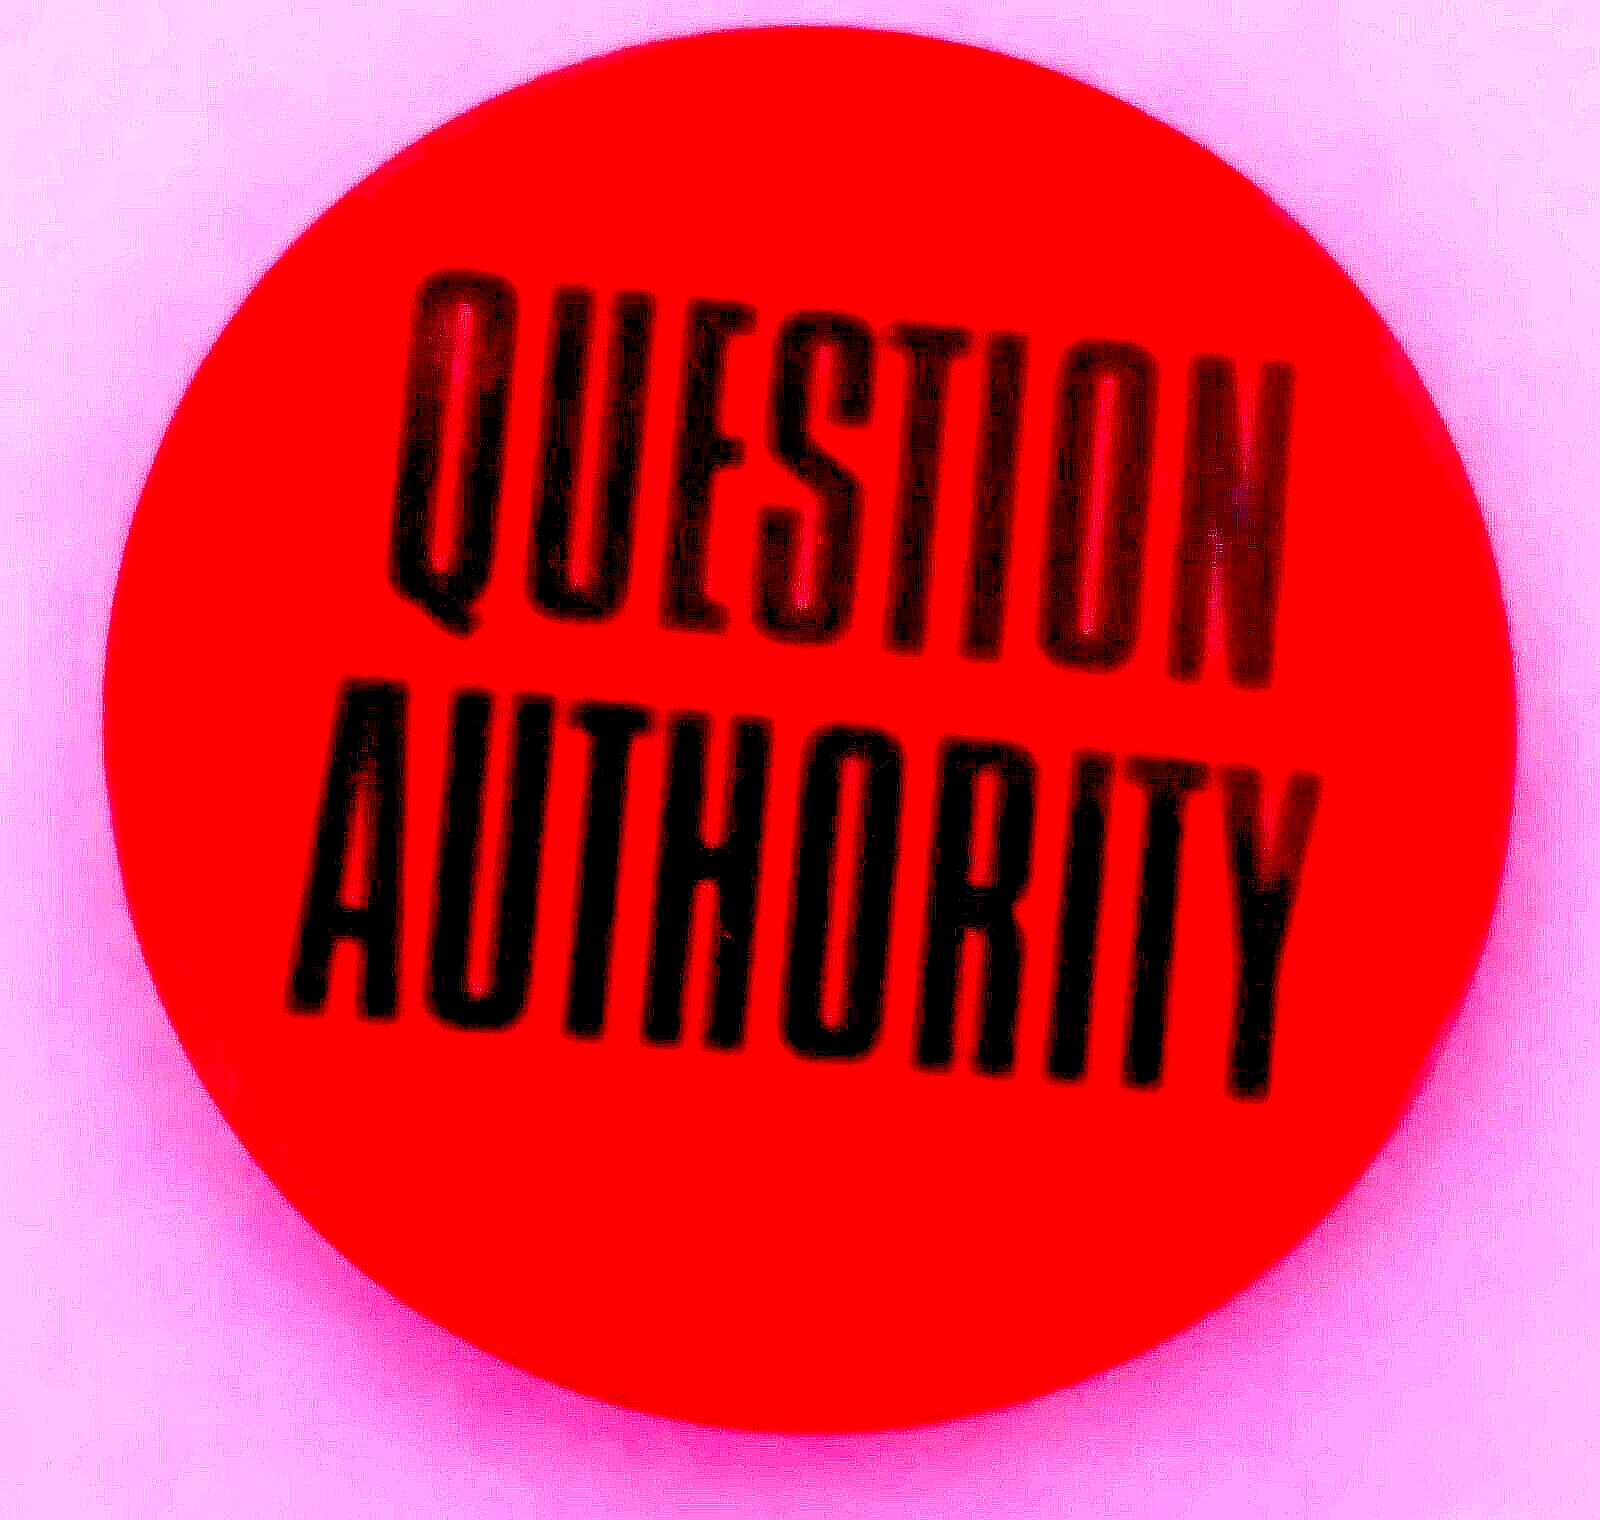 QUESTION AUTHORITY - popular 1979 anti establishment  - Red/Black slogan button